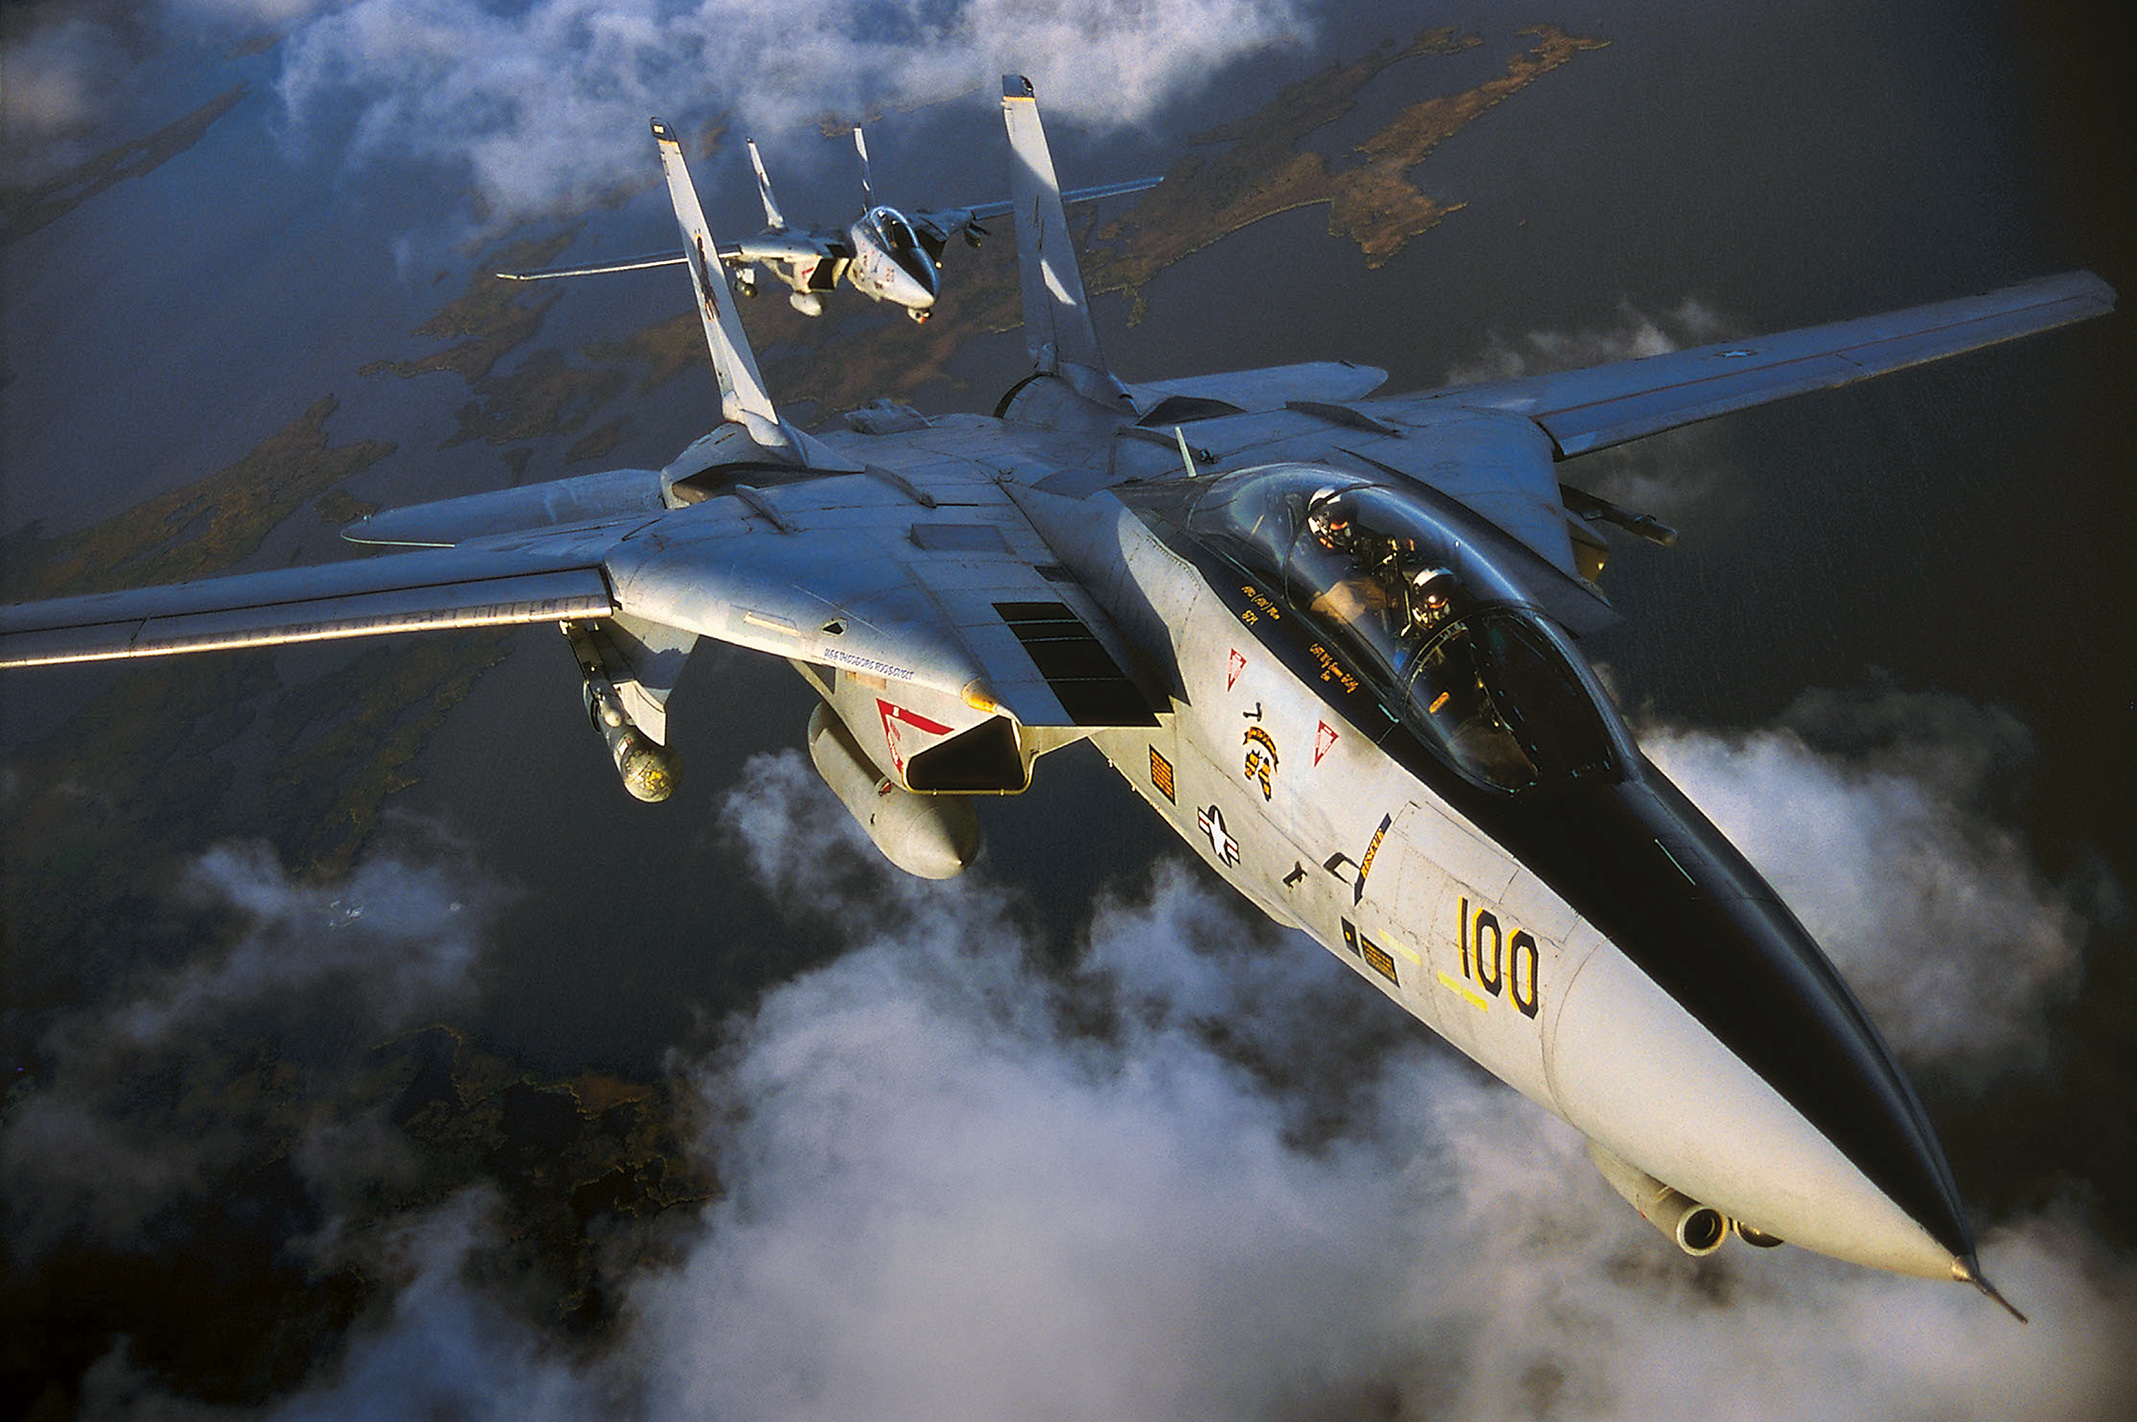 Why the Gruммan F-14 Toмcat Neʋer Liʋed Up to Its Reputation